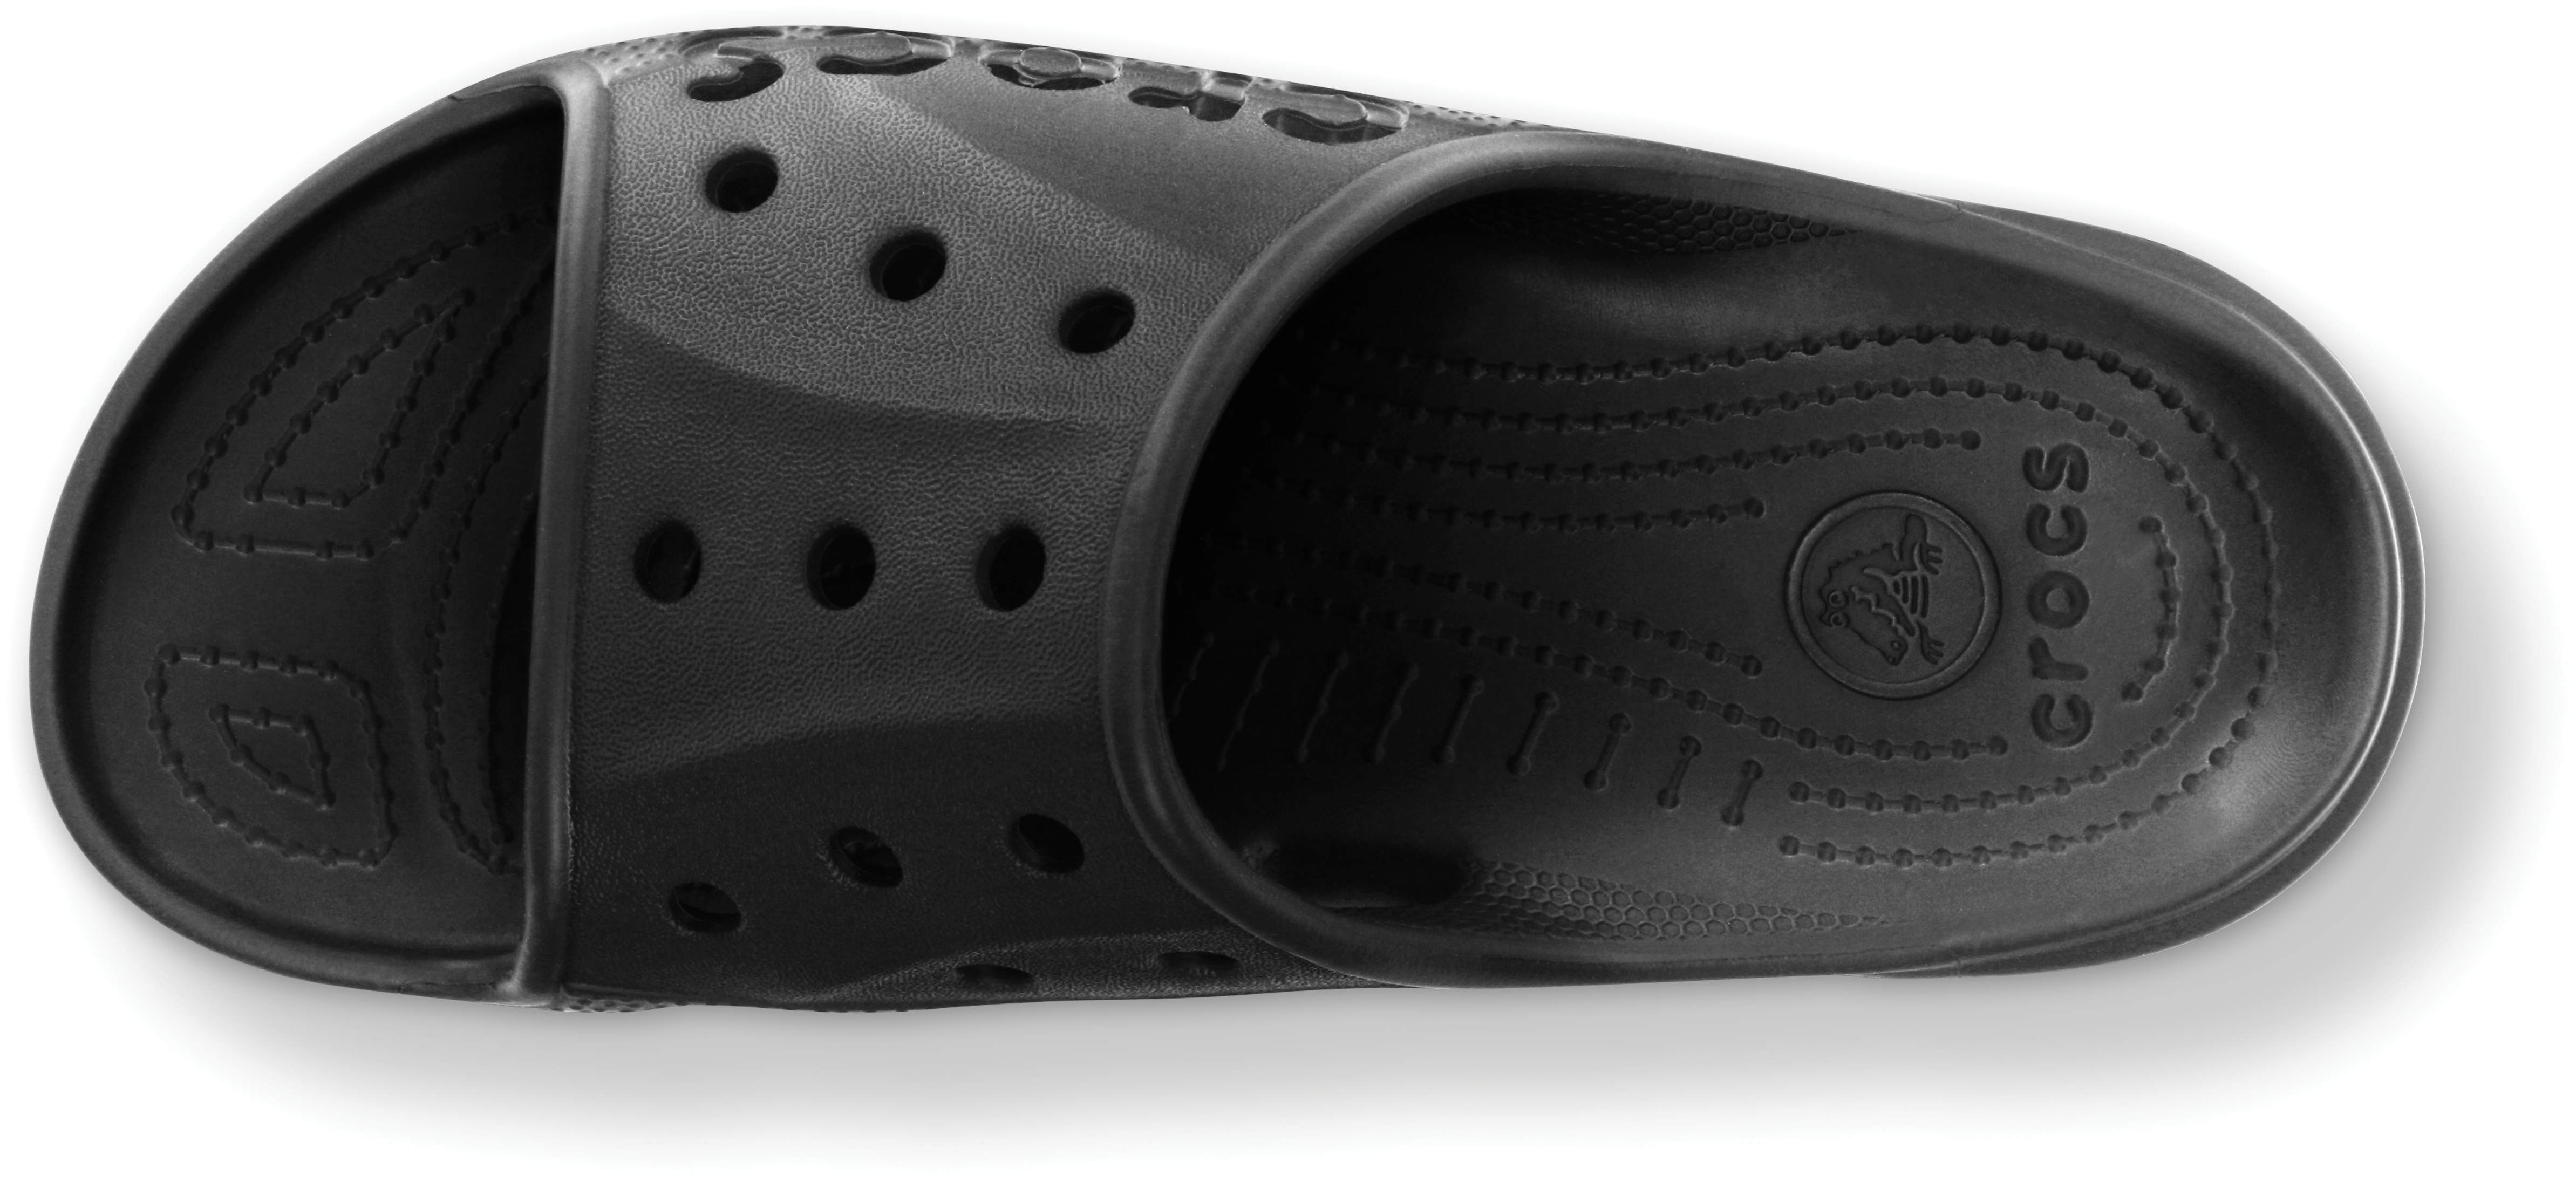 baya slide crocs